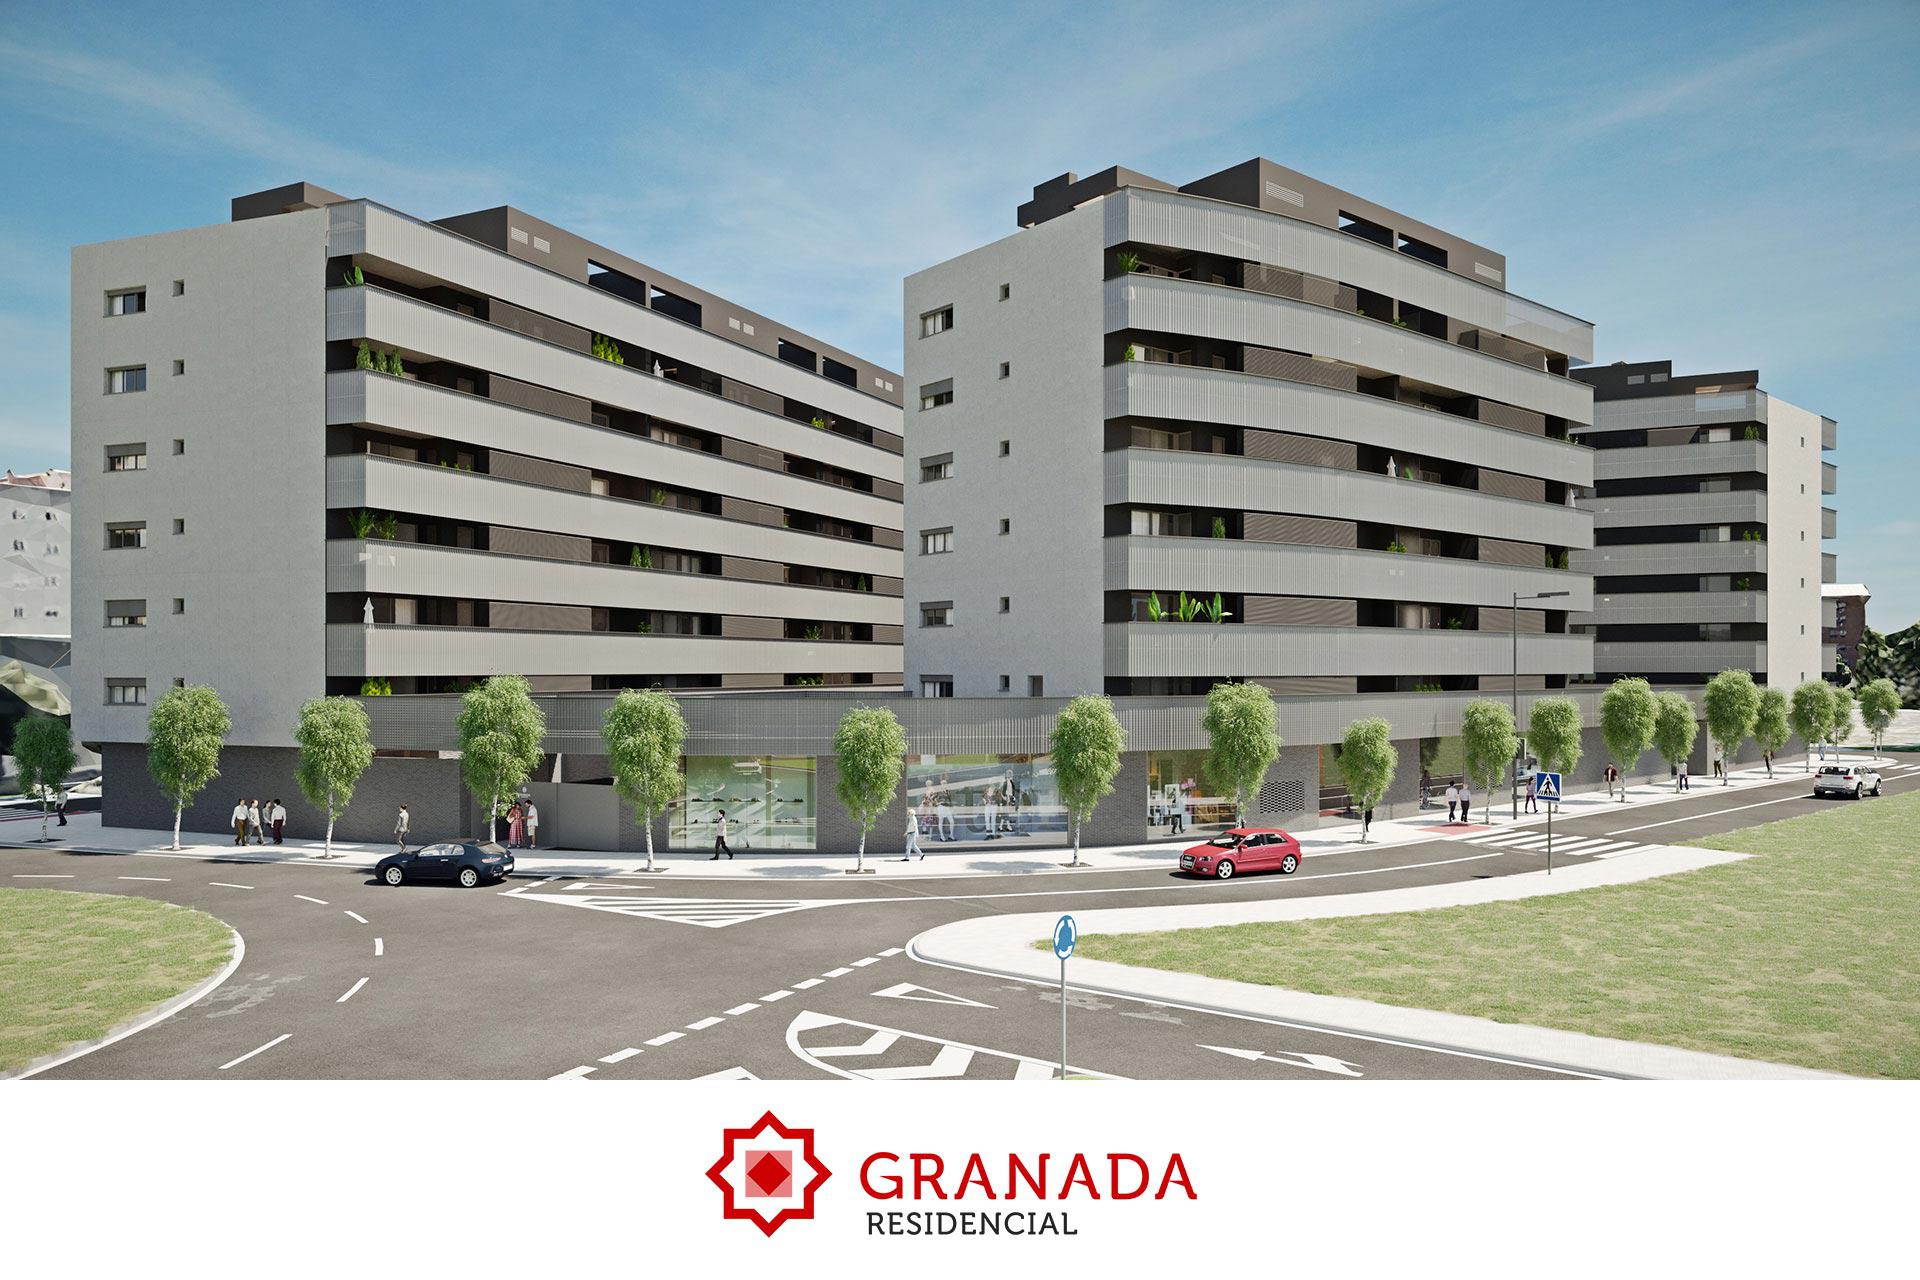 Residencial Granada